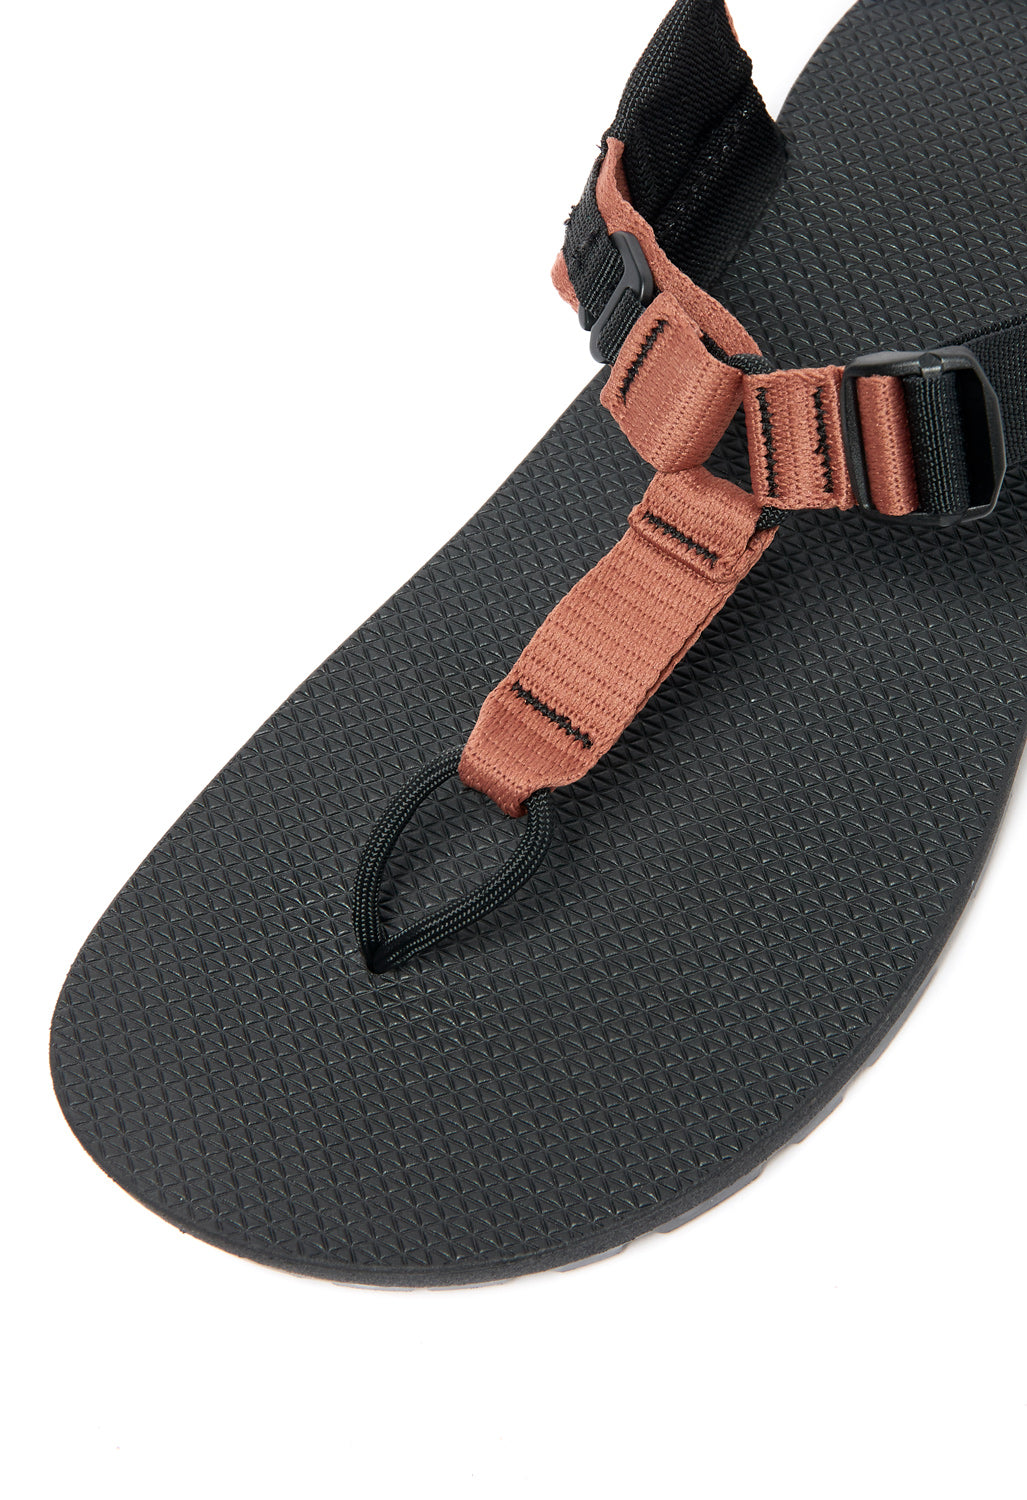 Bedrock Sandals Cairn Evo Sandals - Clay